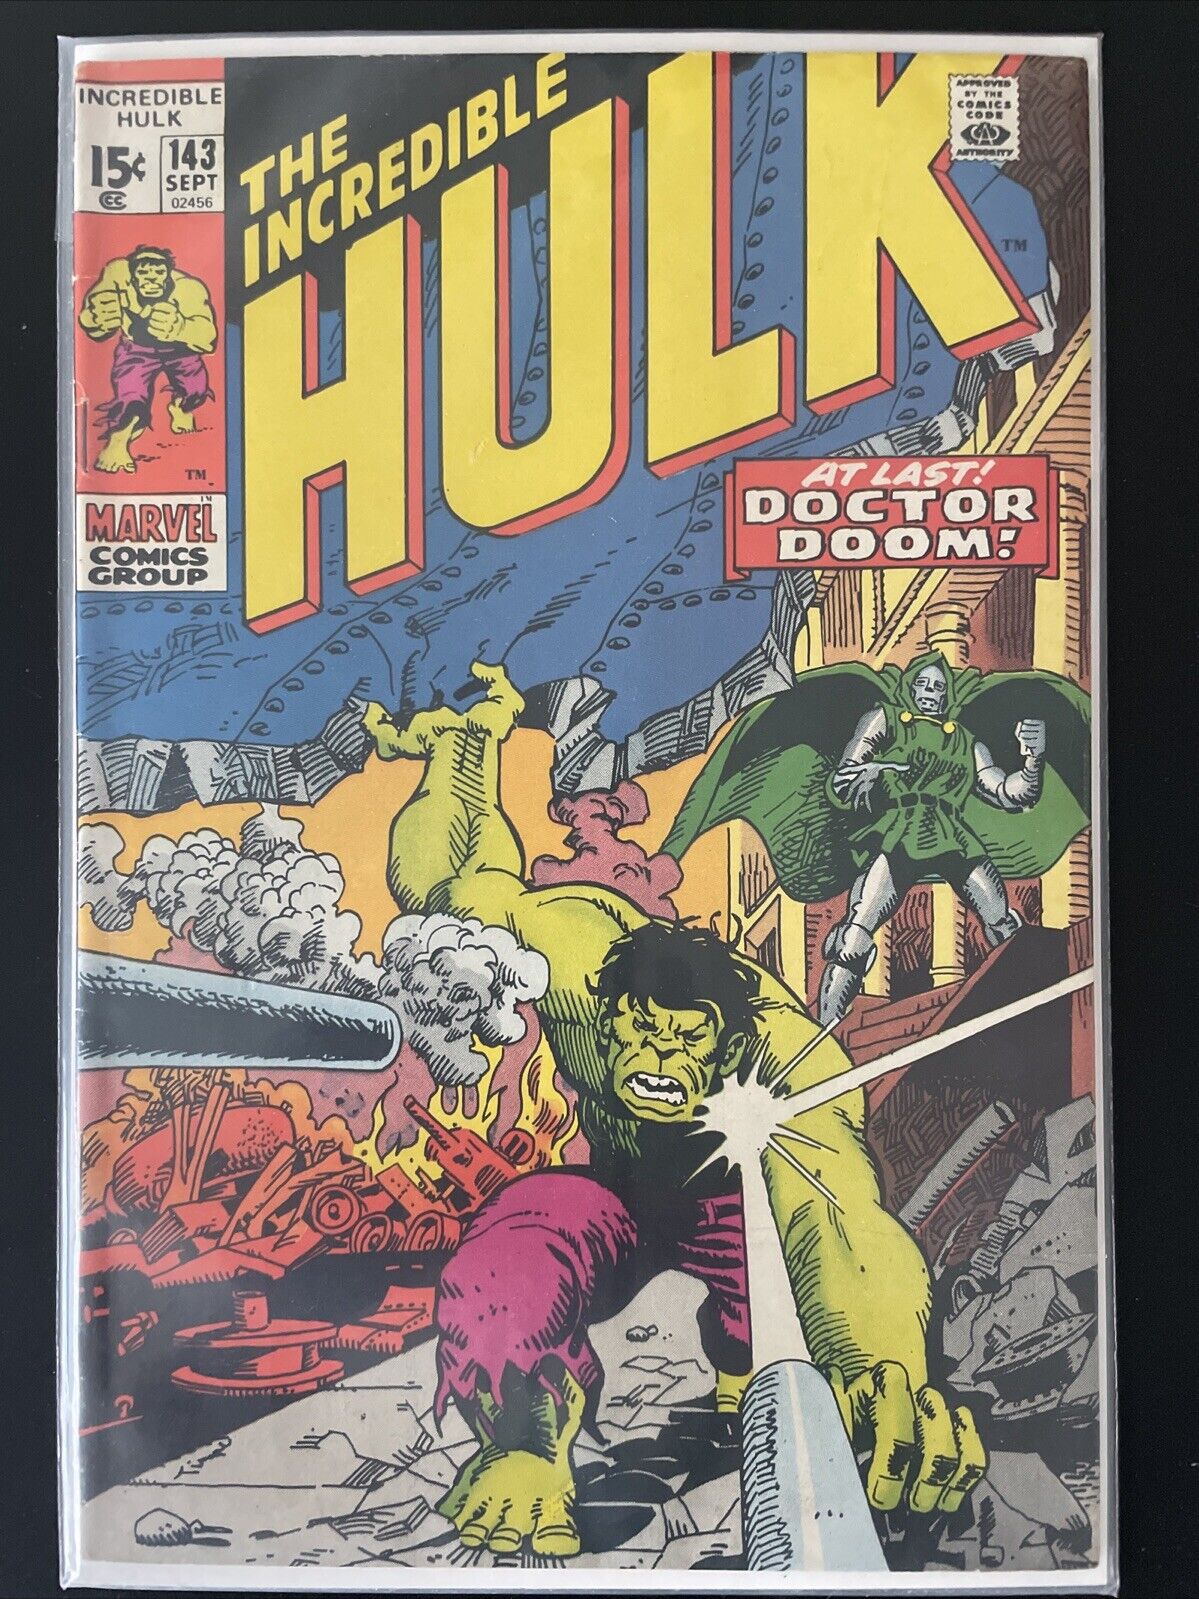 Incredible Hulk #143 (Marvel 1971) Bronze Age DOCTOR DOOM